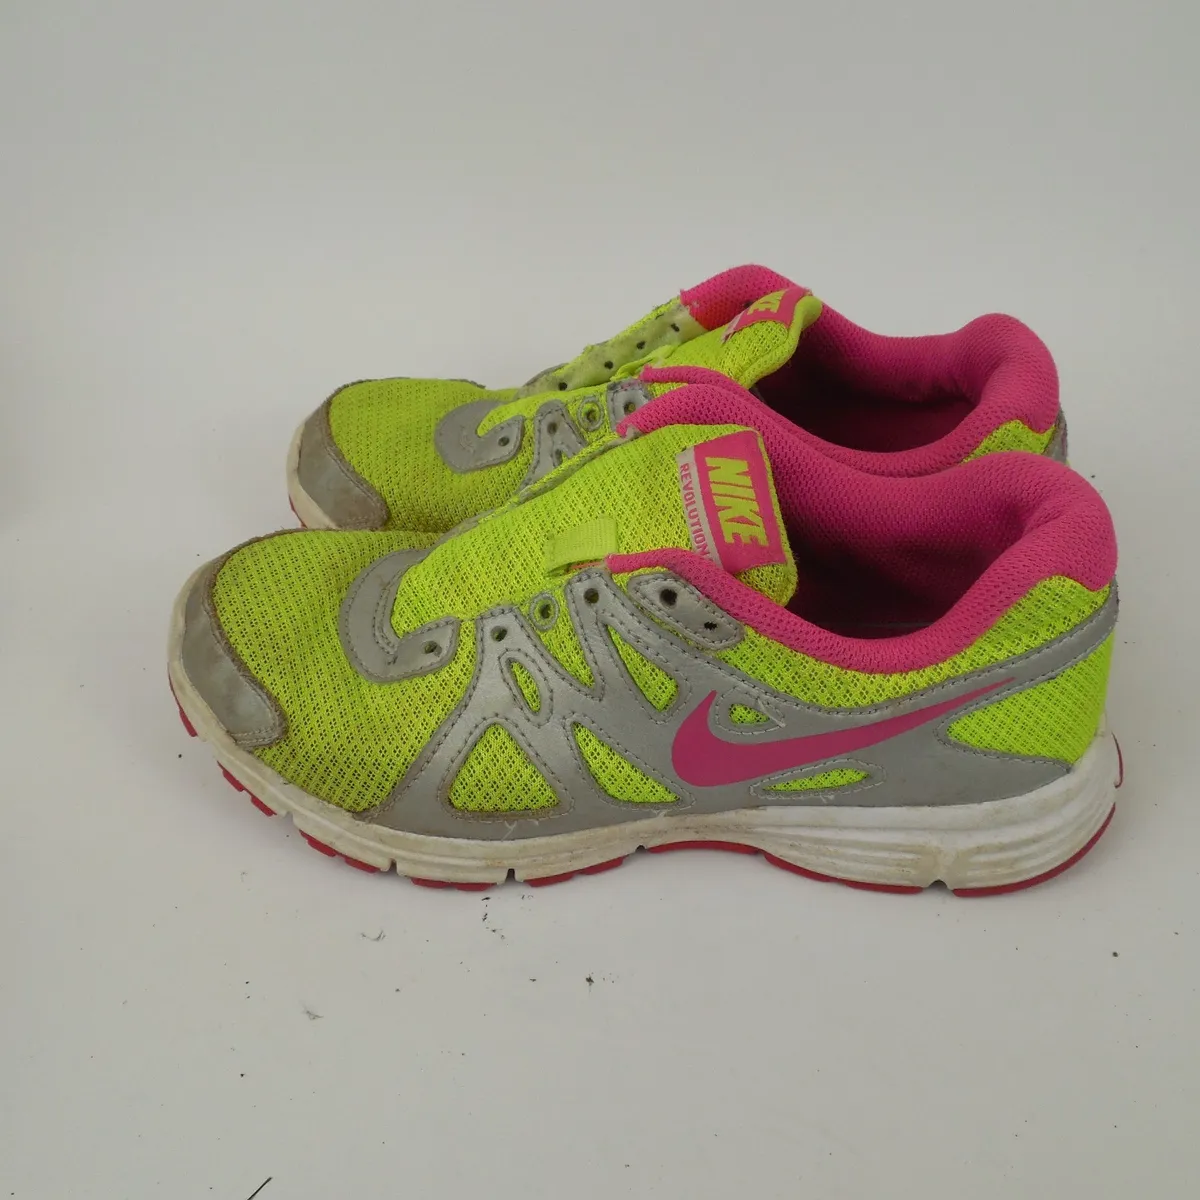 Jugar juegos de computadora Napier diente NIKE REVOLUTION 2 Running Shoes Neon Yellow Pink 555090-761 Girls 4.5 Youth  Used | eBay